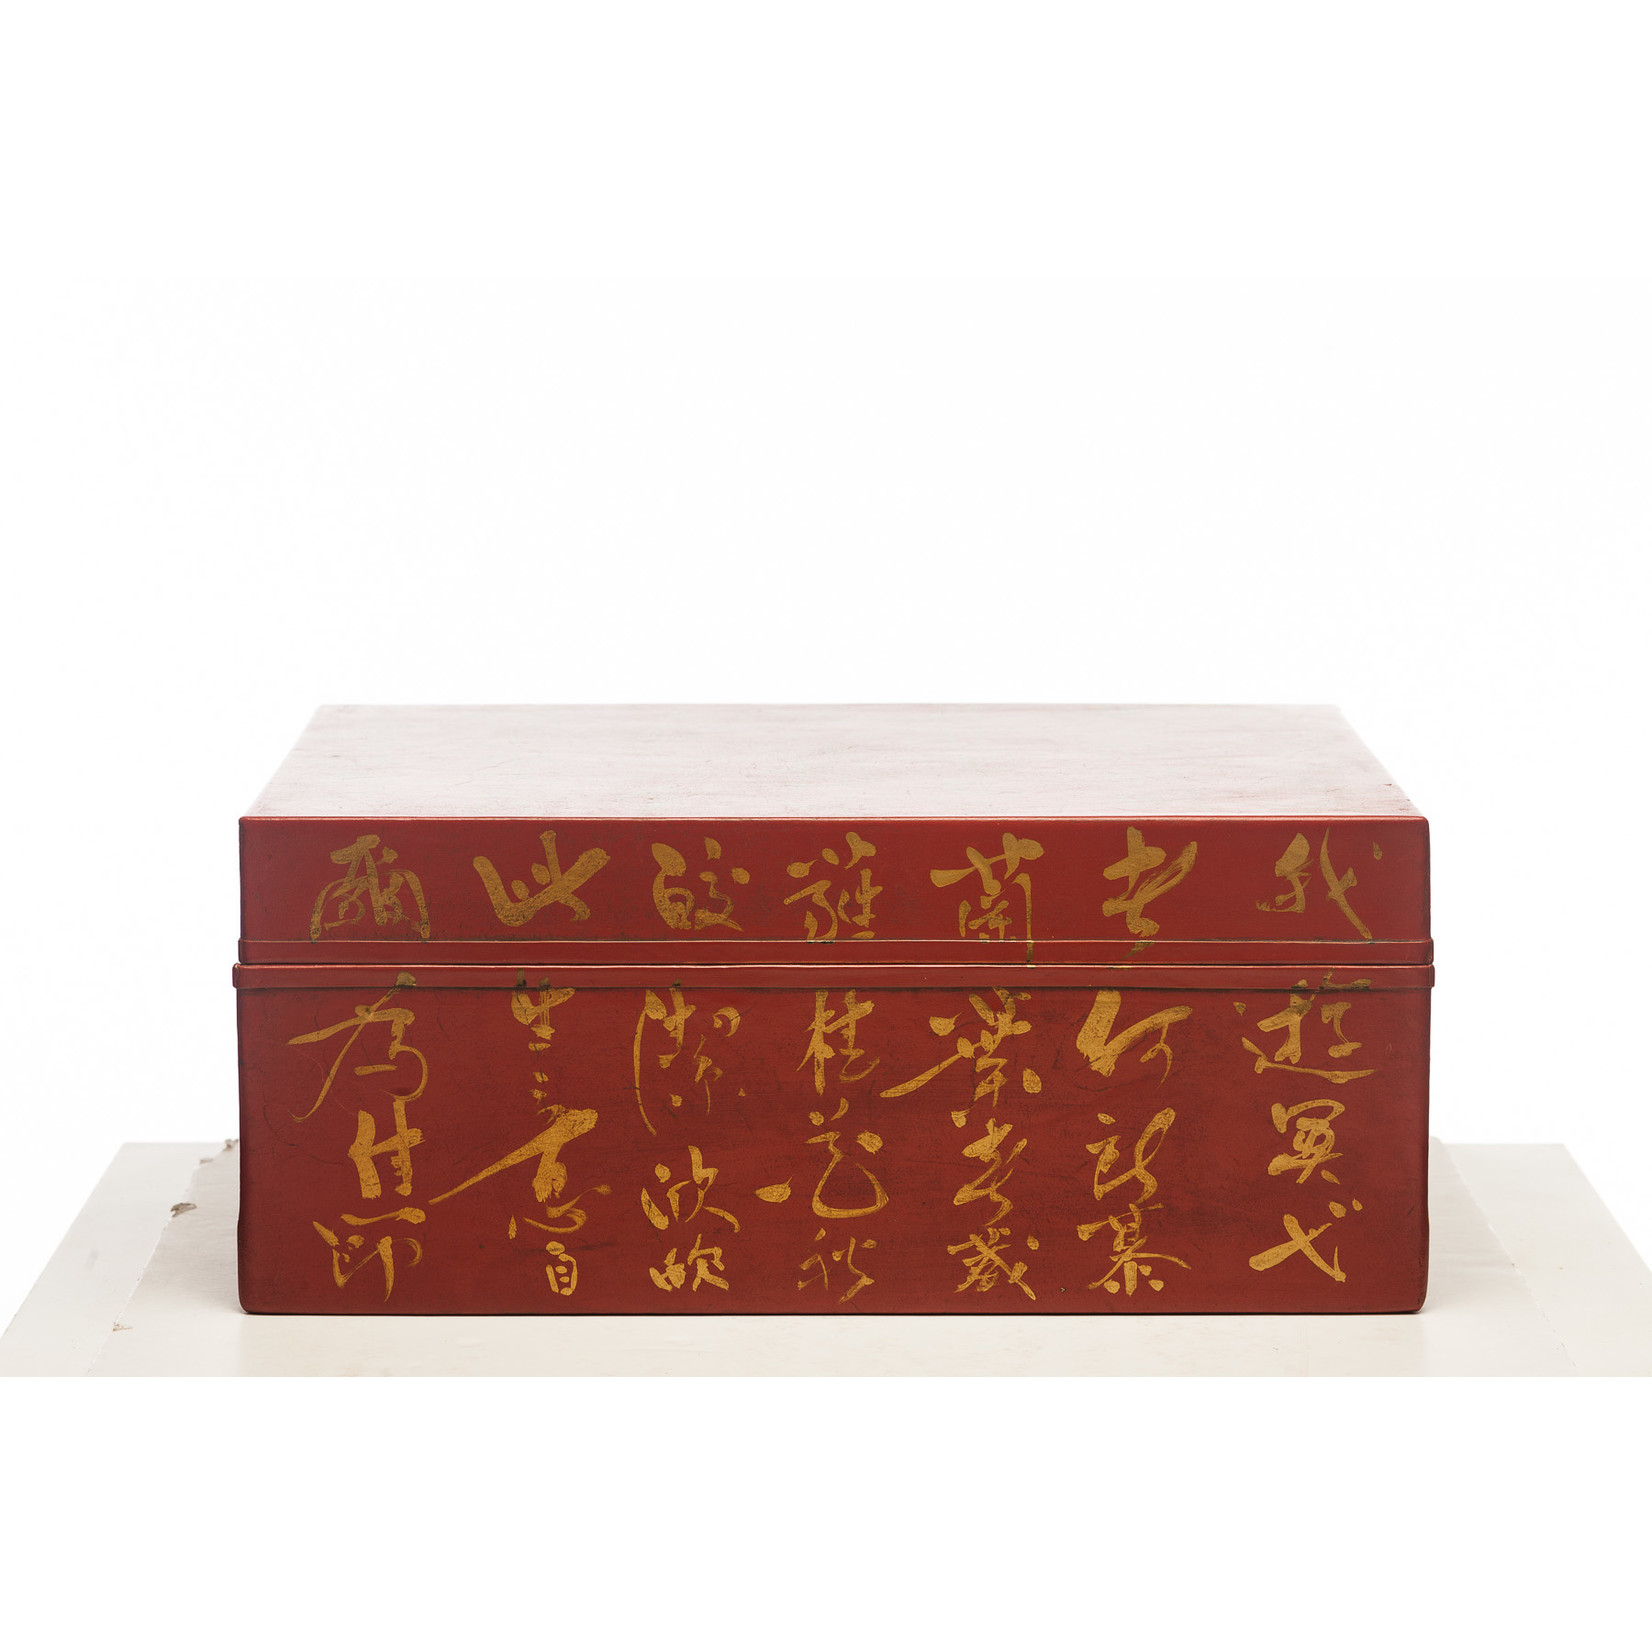 Lawrence & Scott Mandarin Red Inscription Leather Box (16.5")